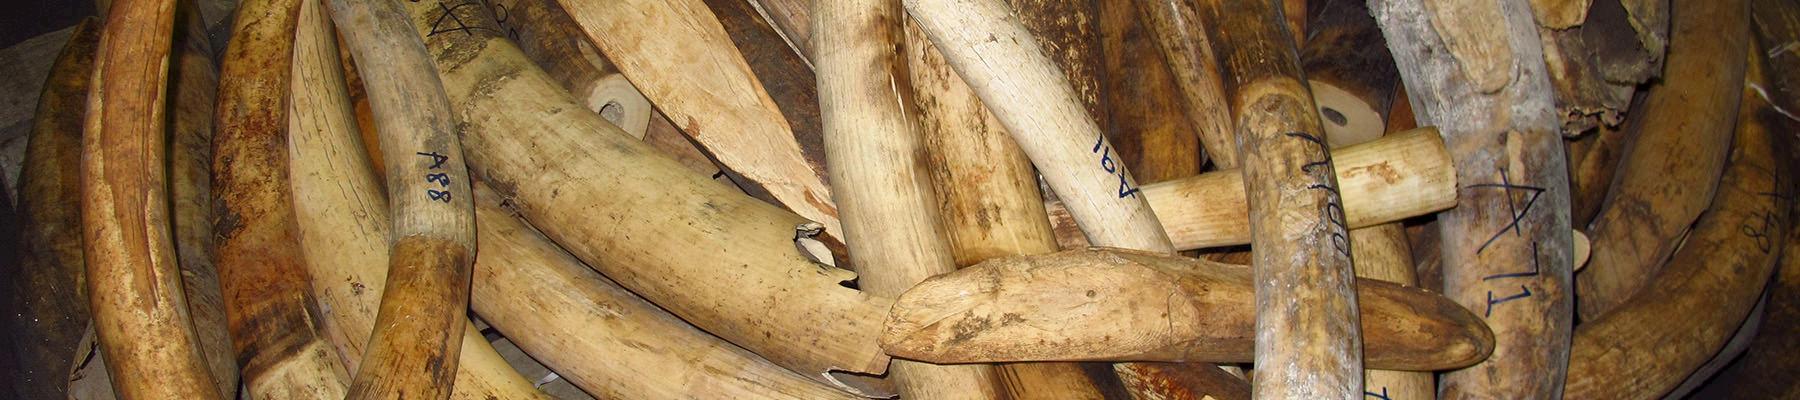 Ivory tusks © TRAFFIC